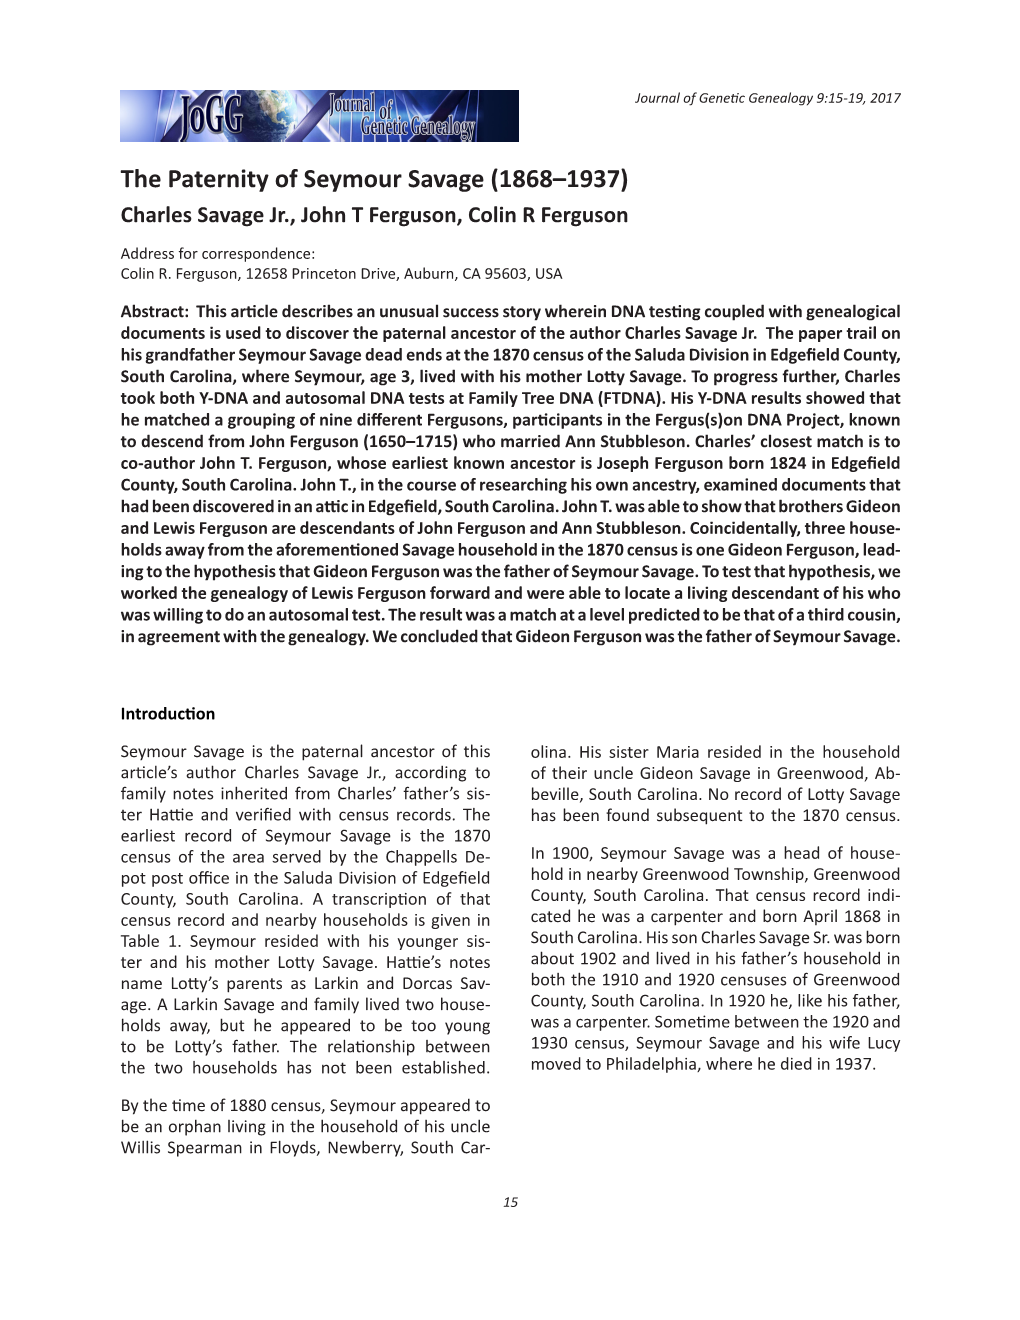 The Paternity of Seymour Savage (1868–1937) Charles Savage Jr., John T Ferguson, Colin R Ferguson